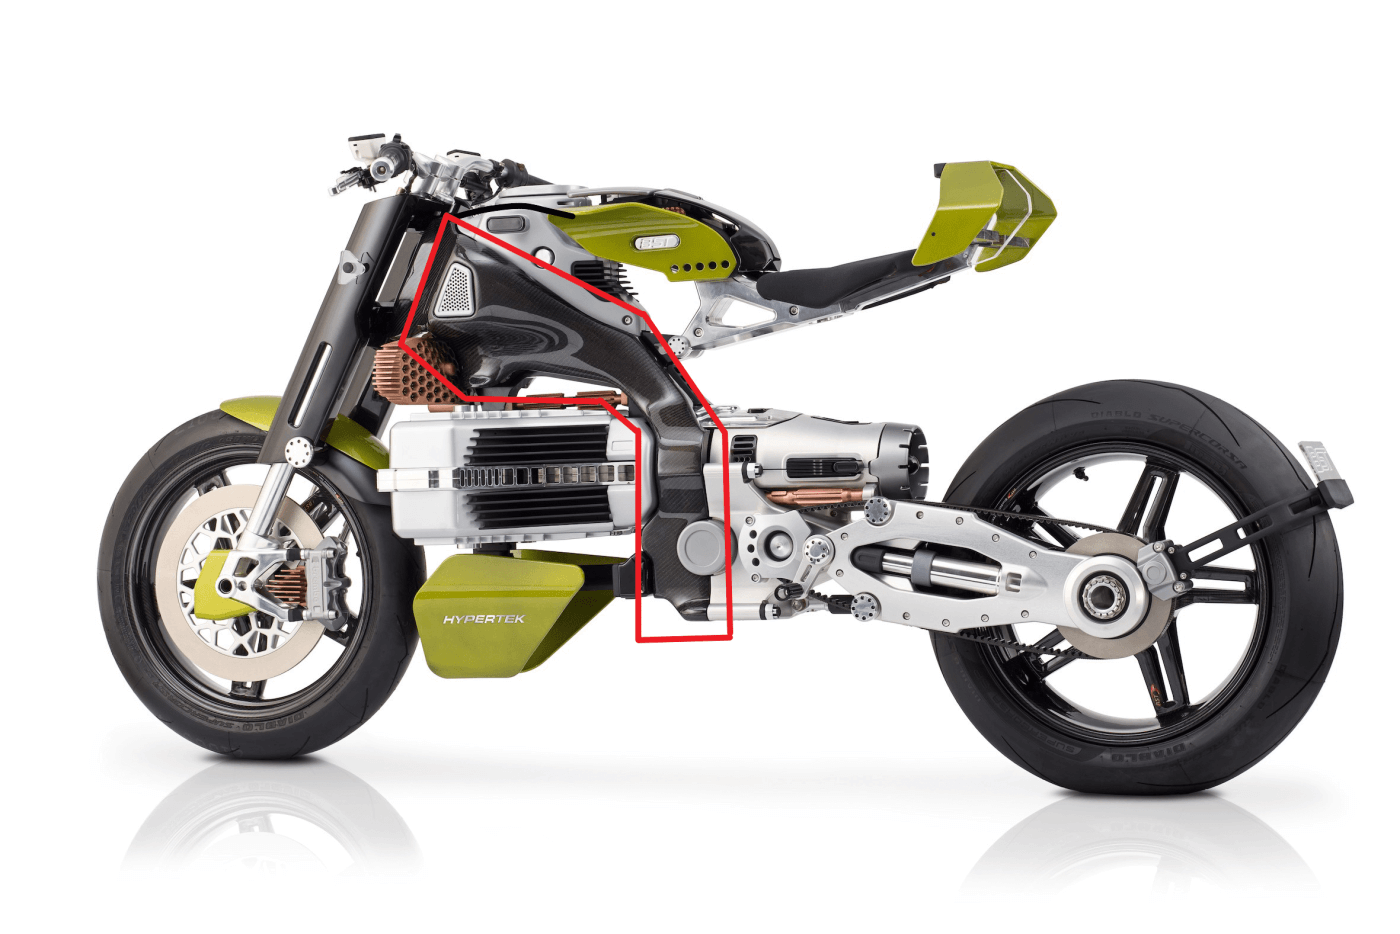 HyperTek Motorcycle